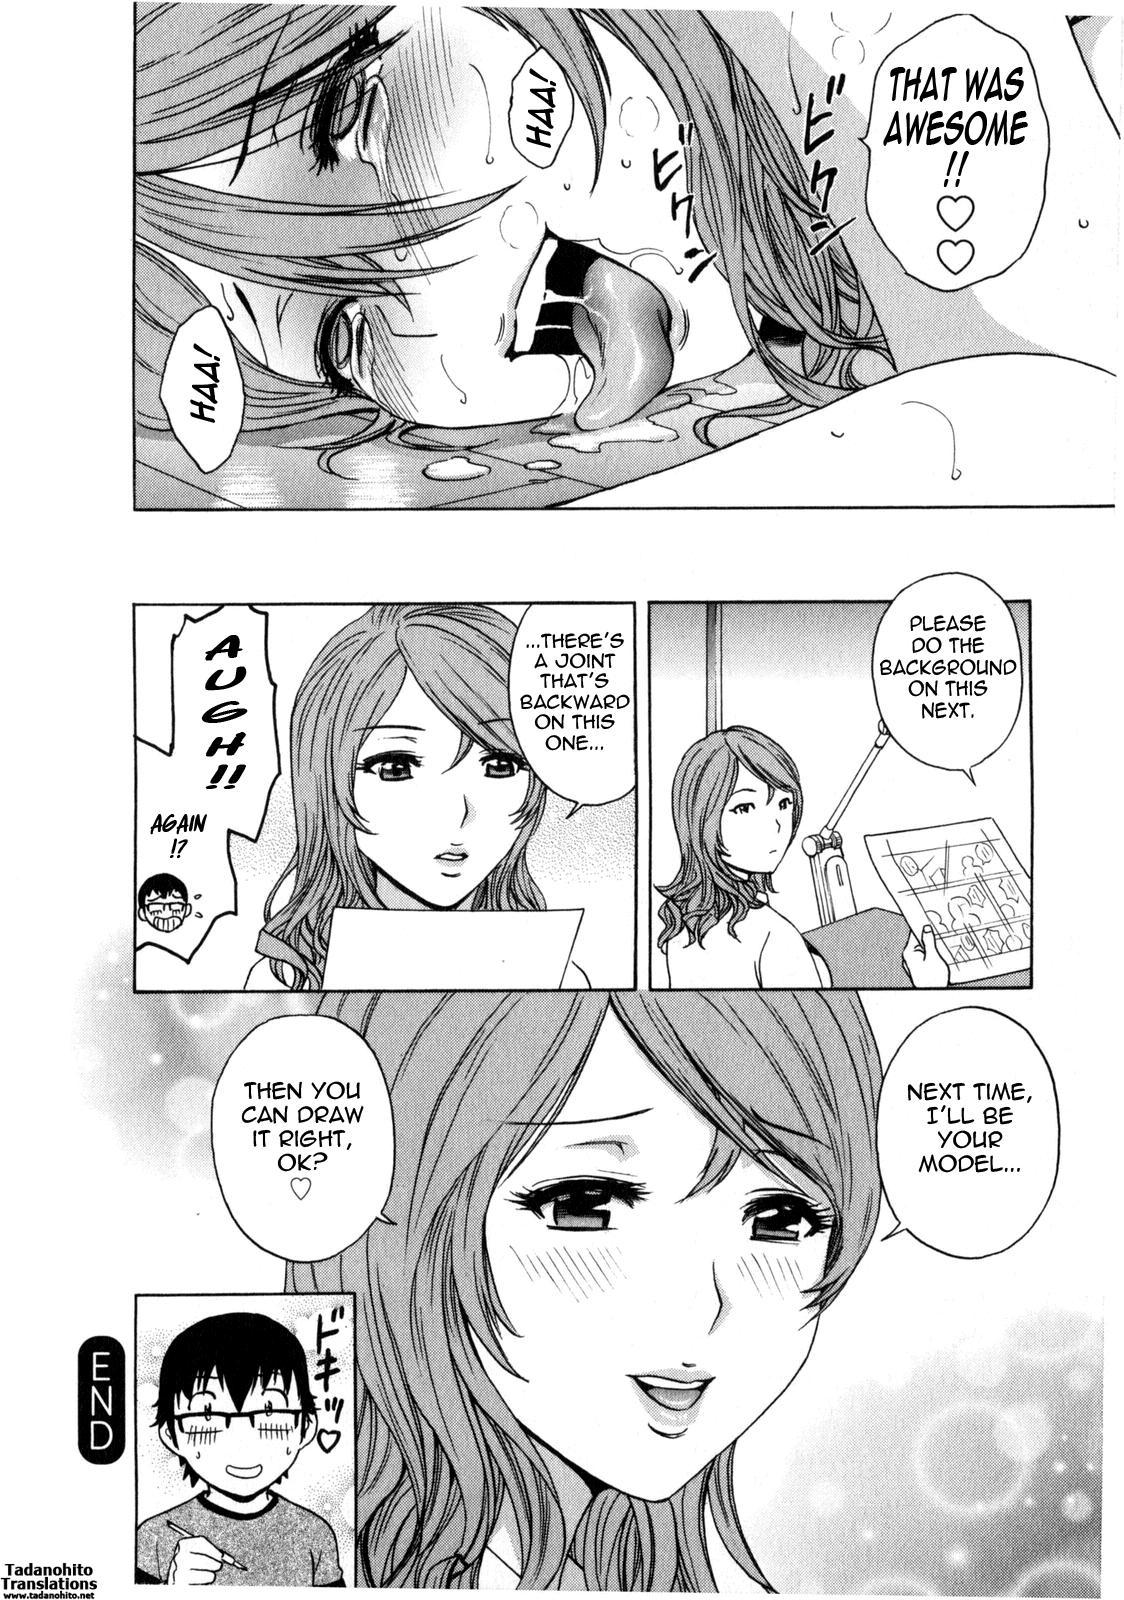 [Hidemaru] Life with Married Women Just Like a Manga 2 - Ch. 1-6 [English] {Tadanohito} 44